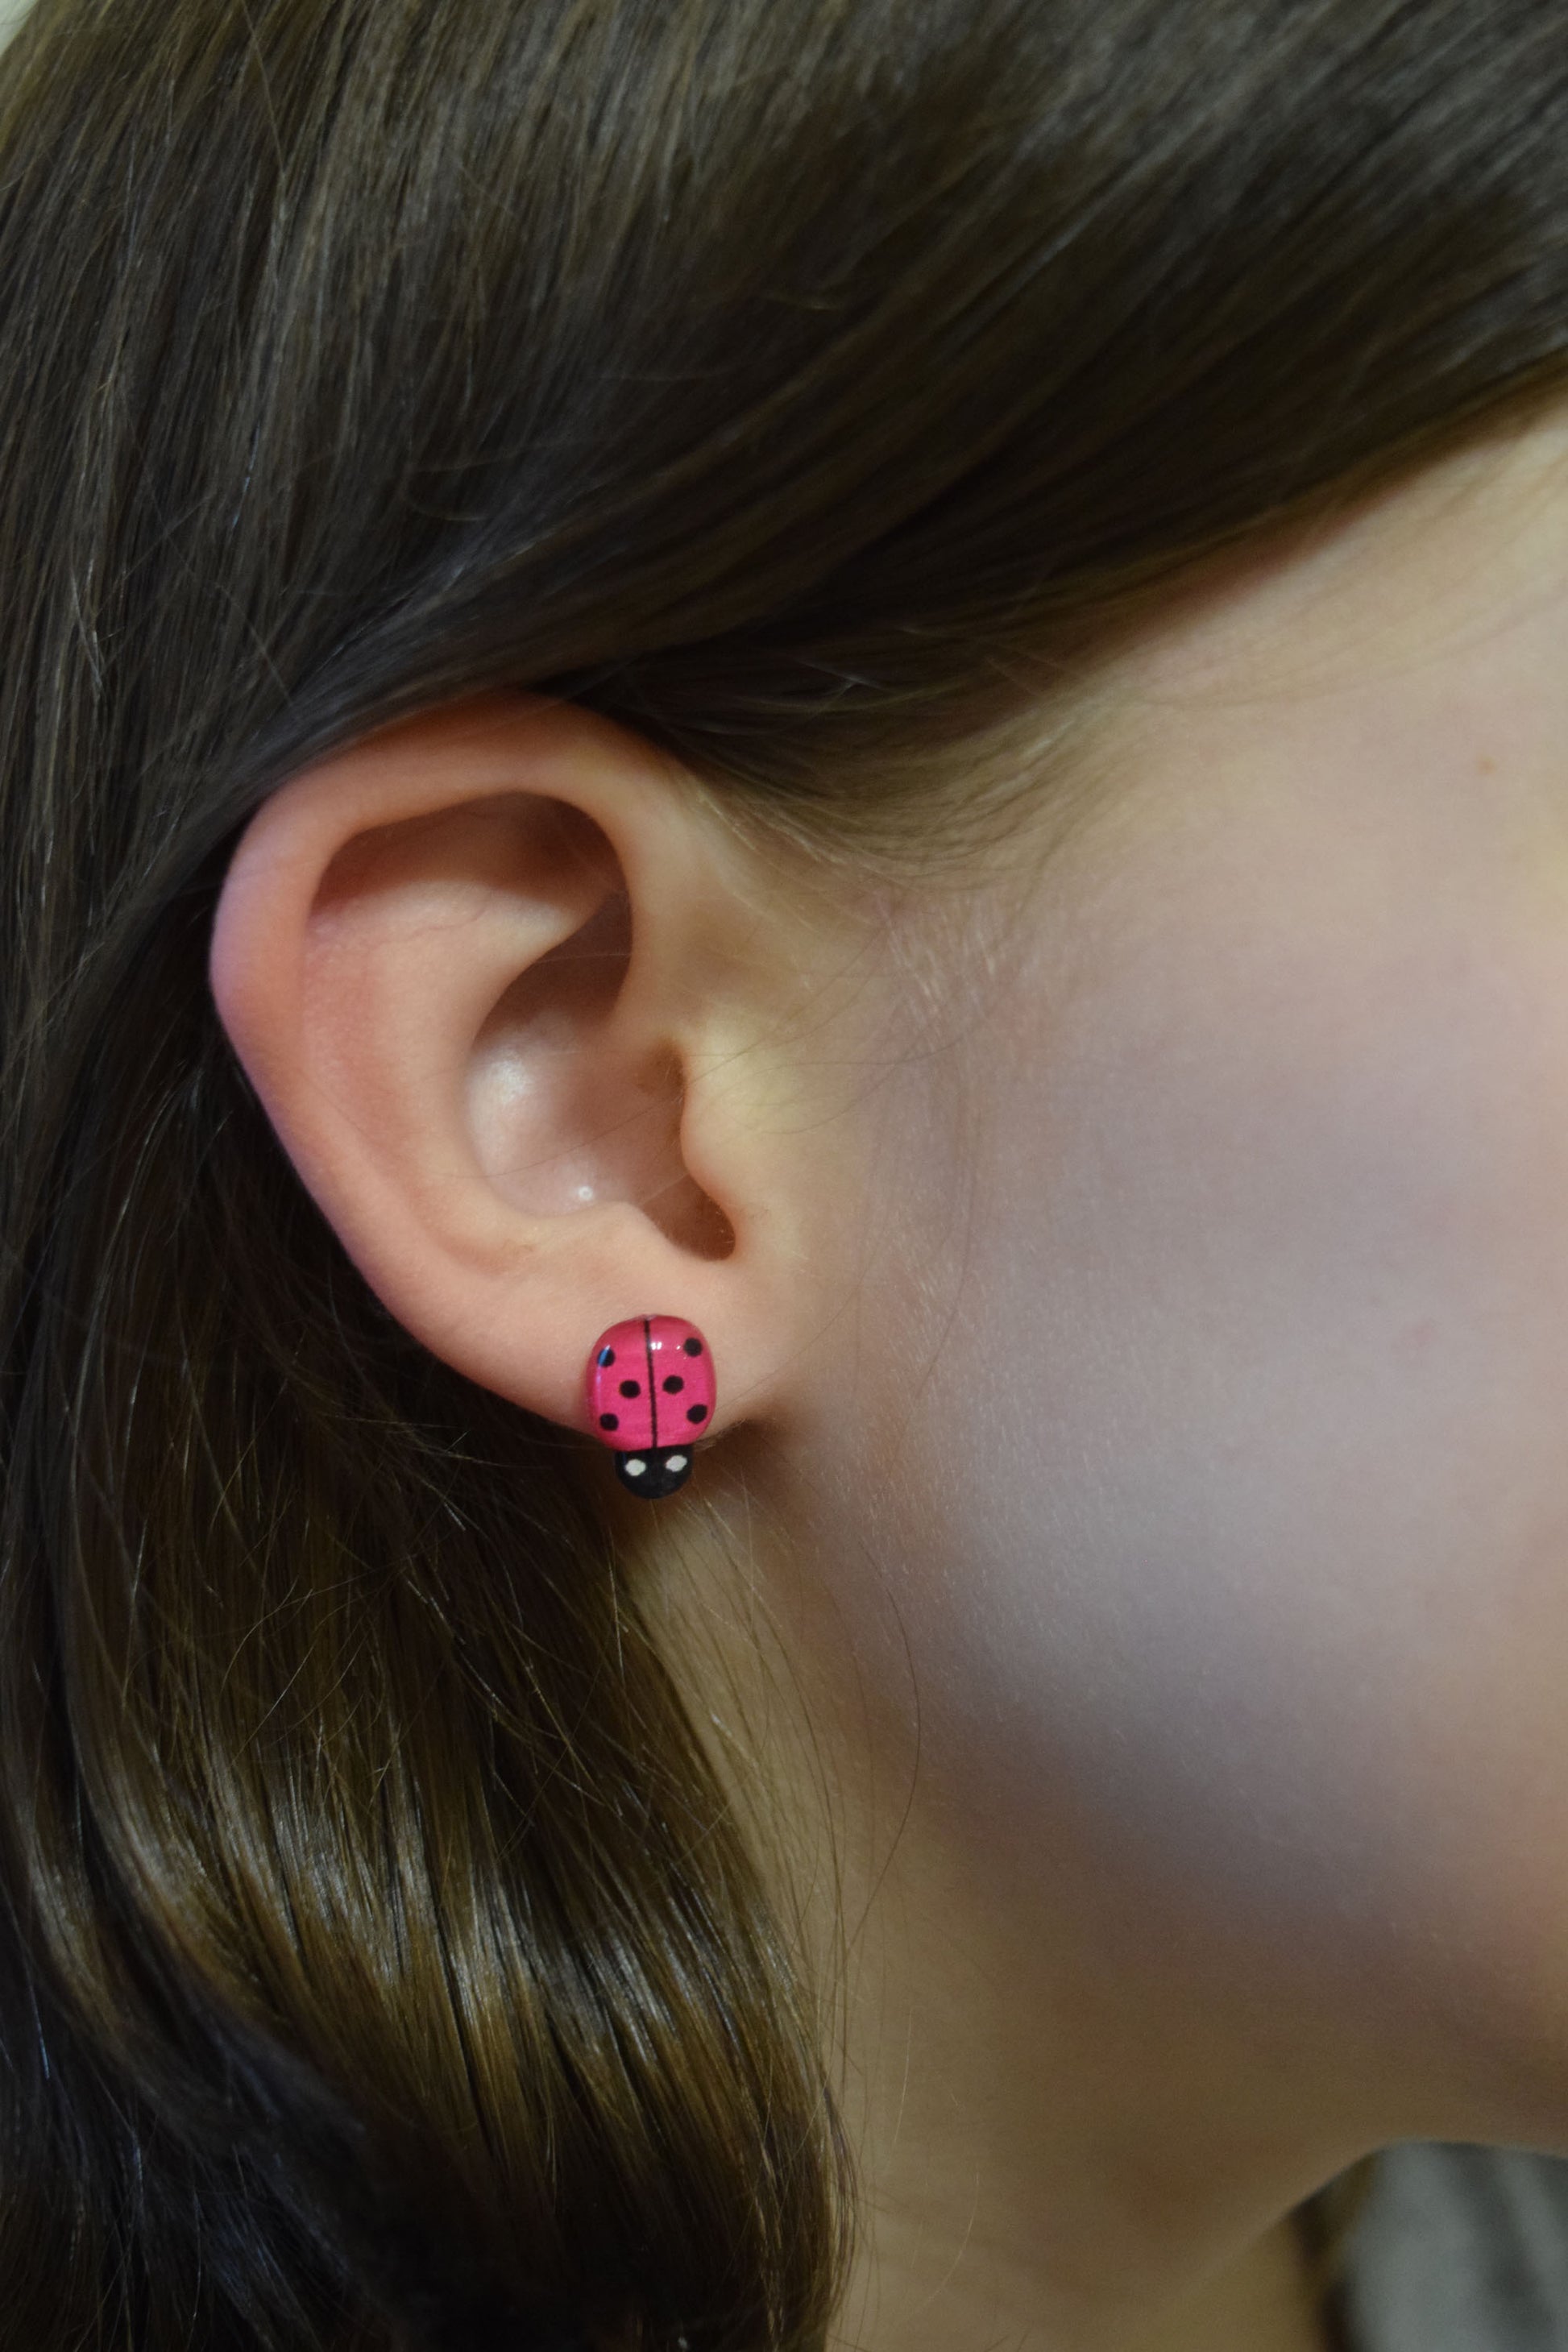 catholic saint earrings, catholic kid earrings, catholic girl earrings, ladybug earrings, earrings for mary, earrings honoring mary, ladybeetle